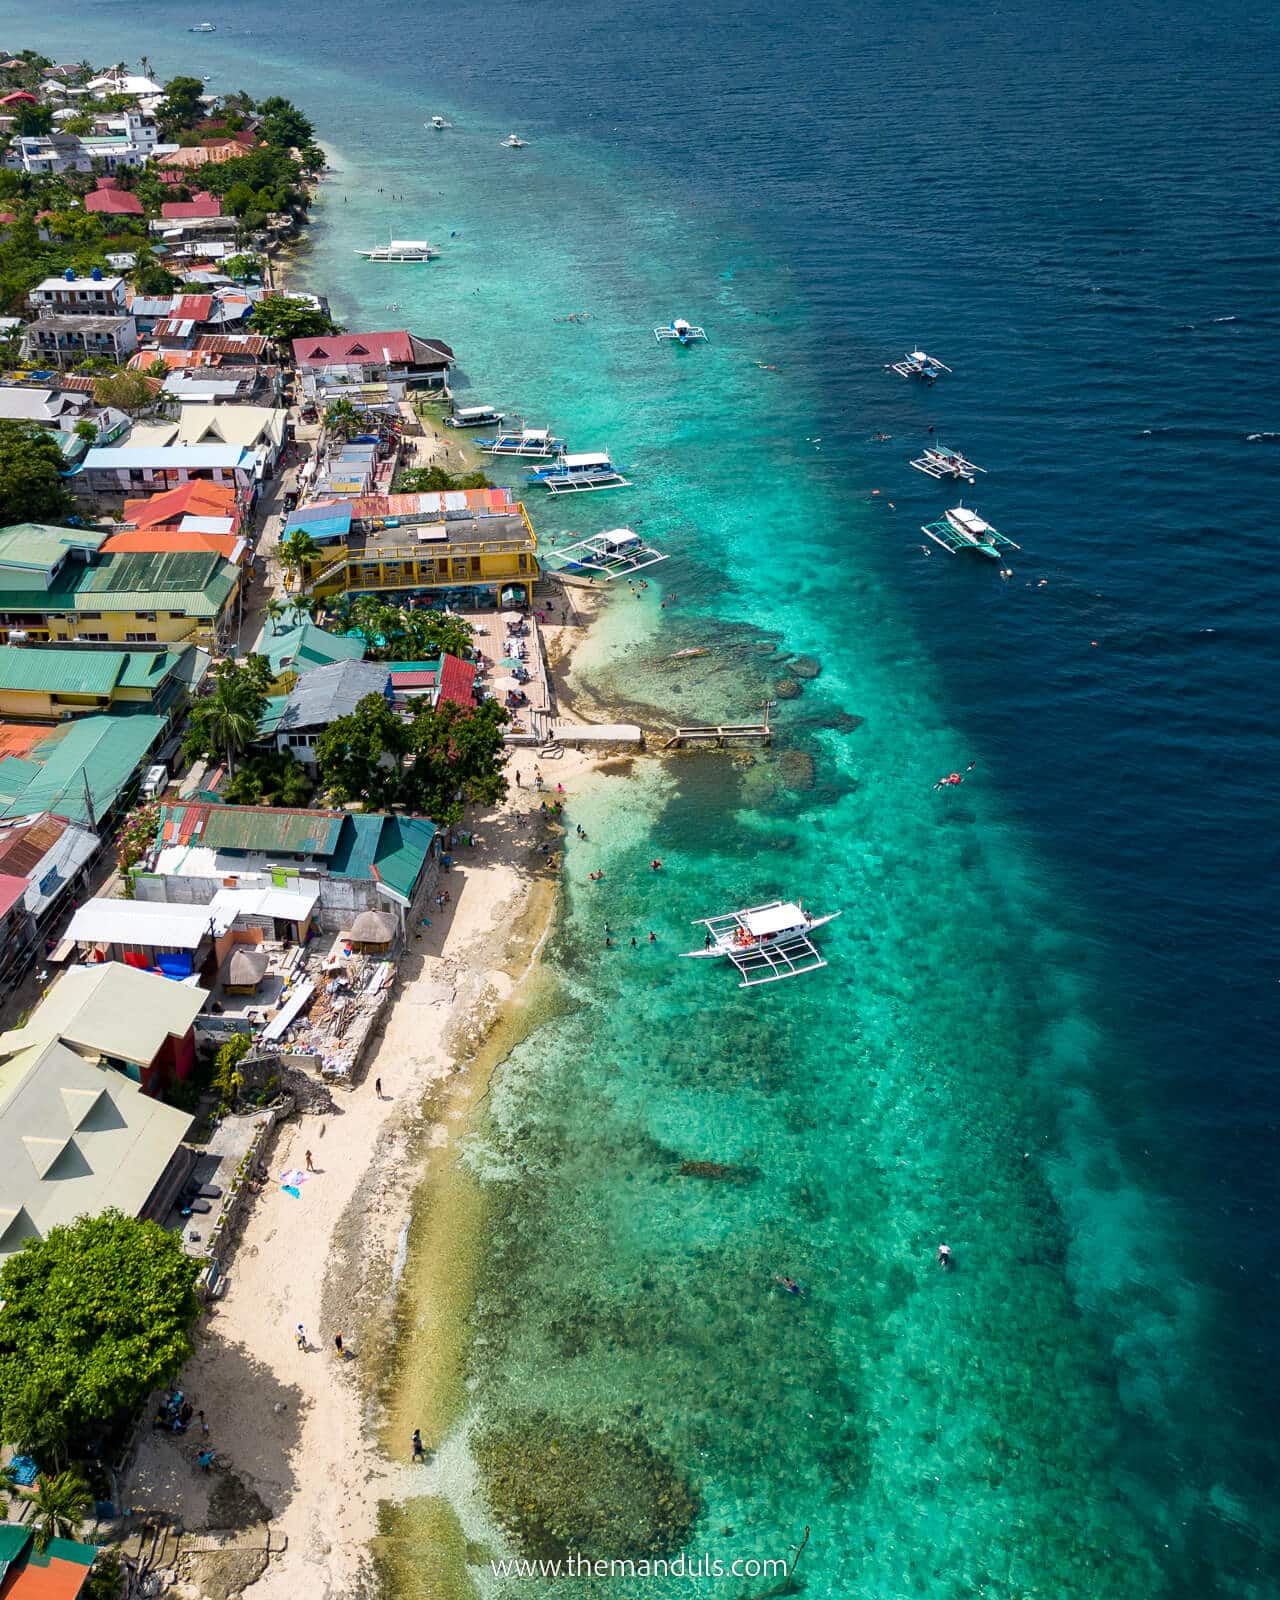 panagsama beach, moalboal sardine run, tourist spots cebu, best attractions cebu, things to do on cebu island, cebu itinerary, moalboal sardines, cebu sardine run, moalboal snorkelling, philippines, sea turtlea, panagsama beach drone